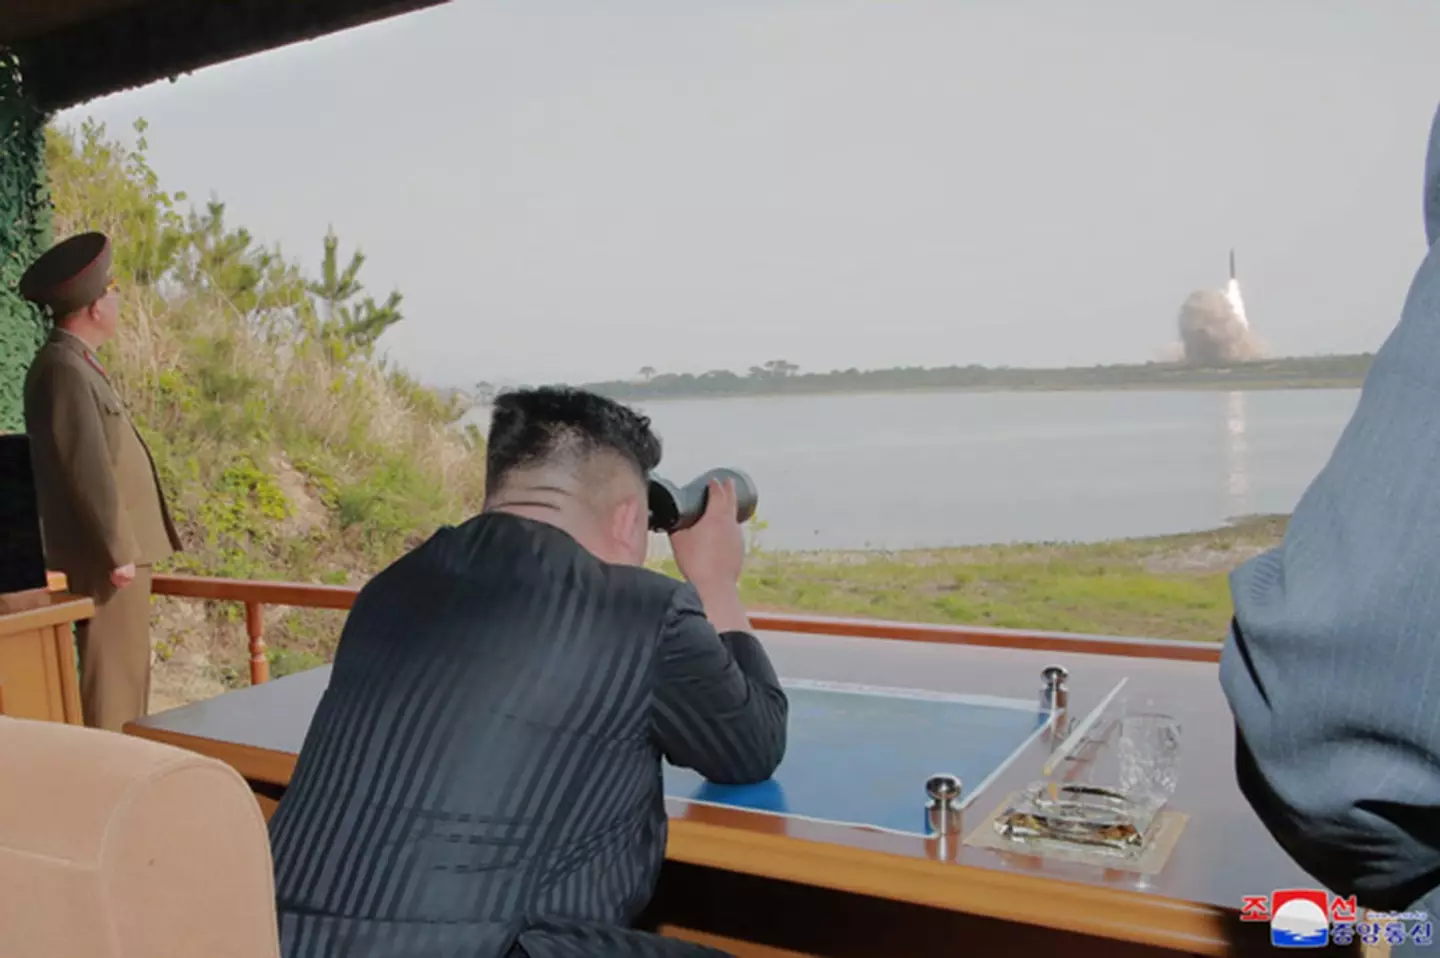 North Korean leader Kim Jong Un supervising a military strike drill.